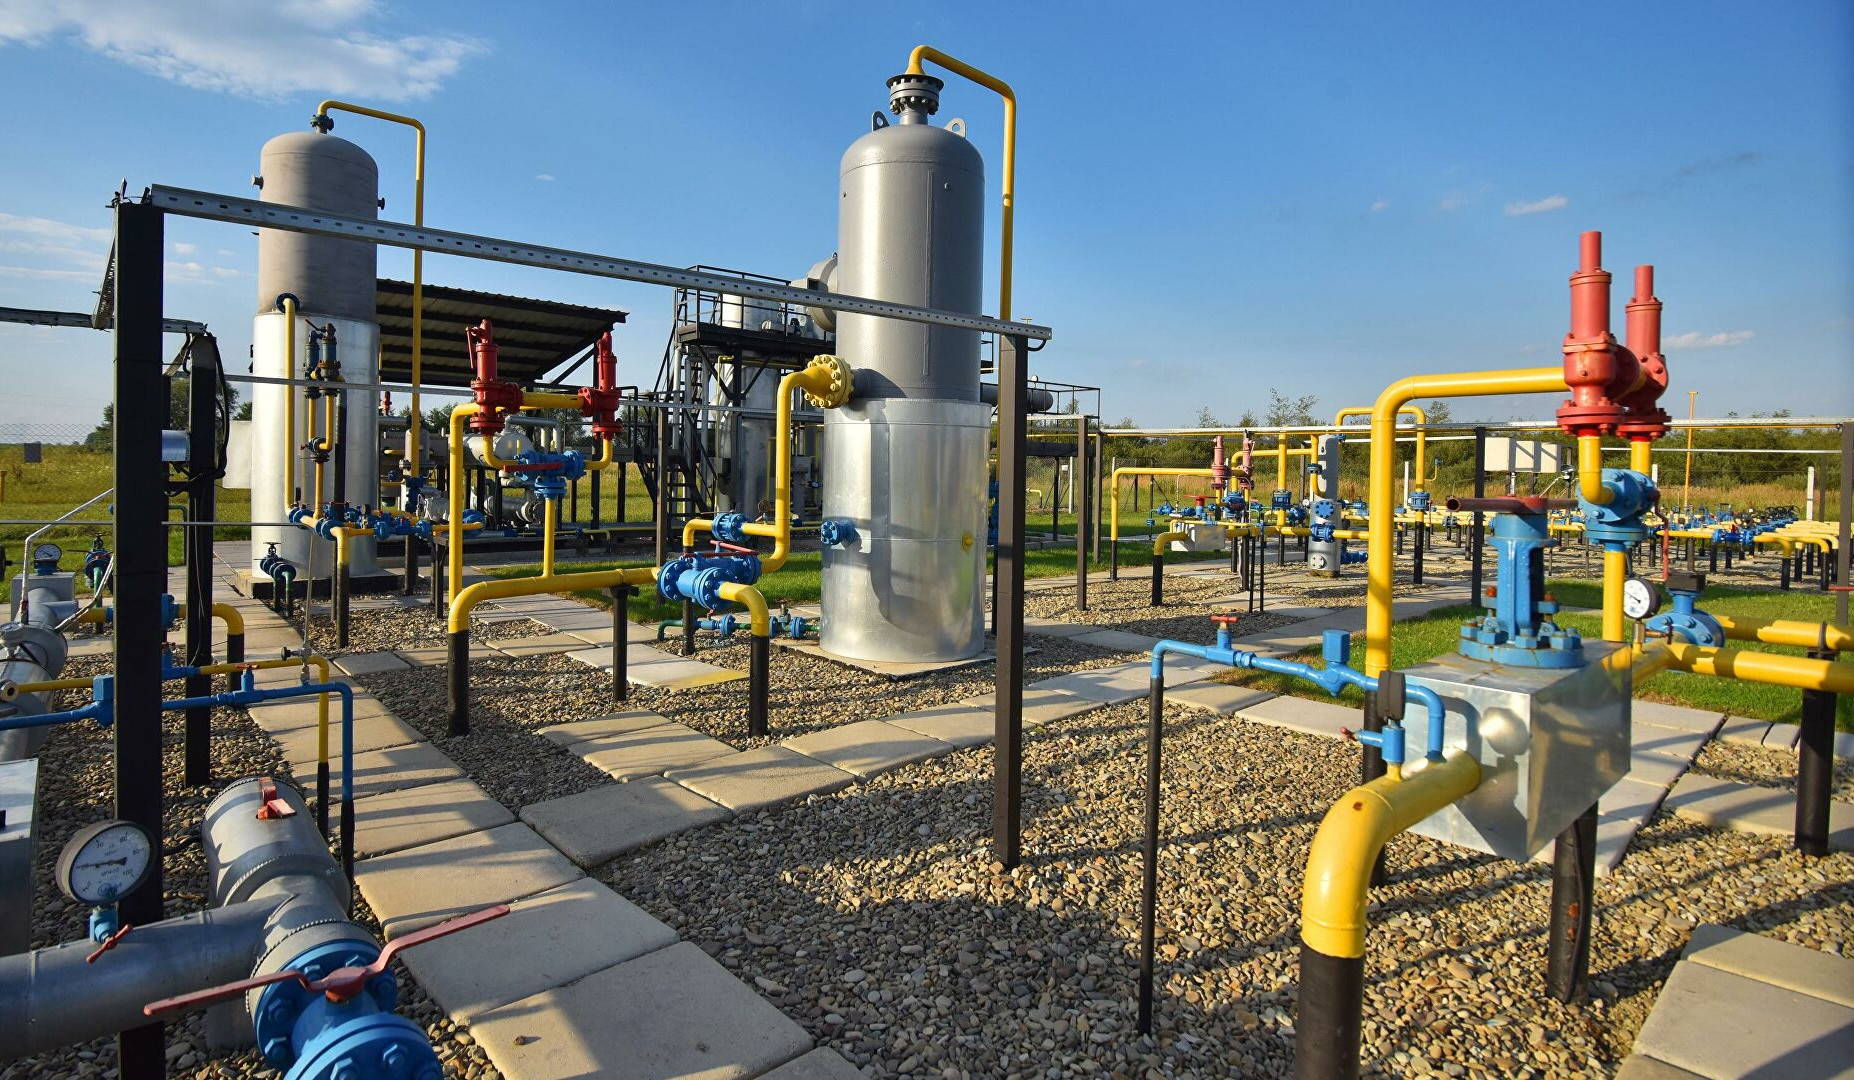 Ukraine offered its gas storage facilities to Azerbaijan